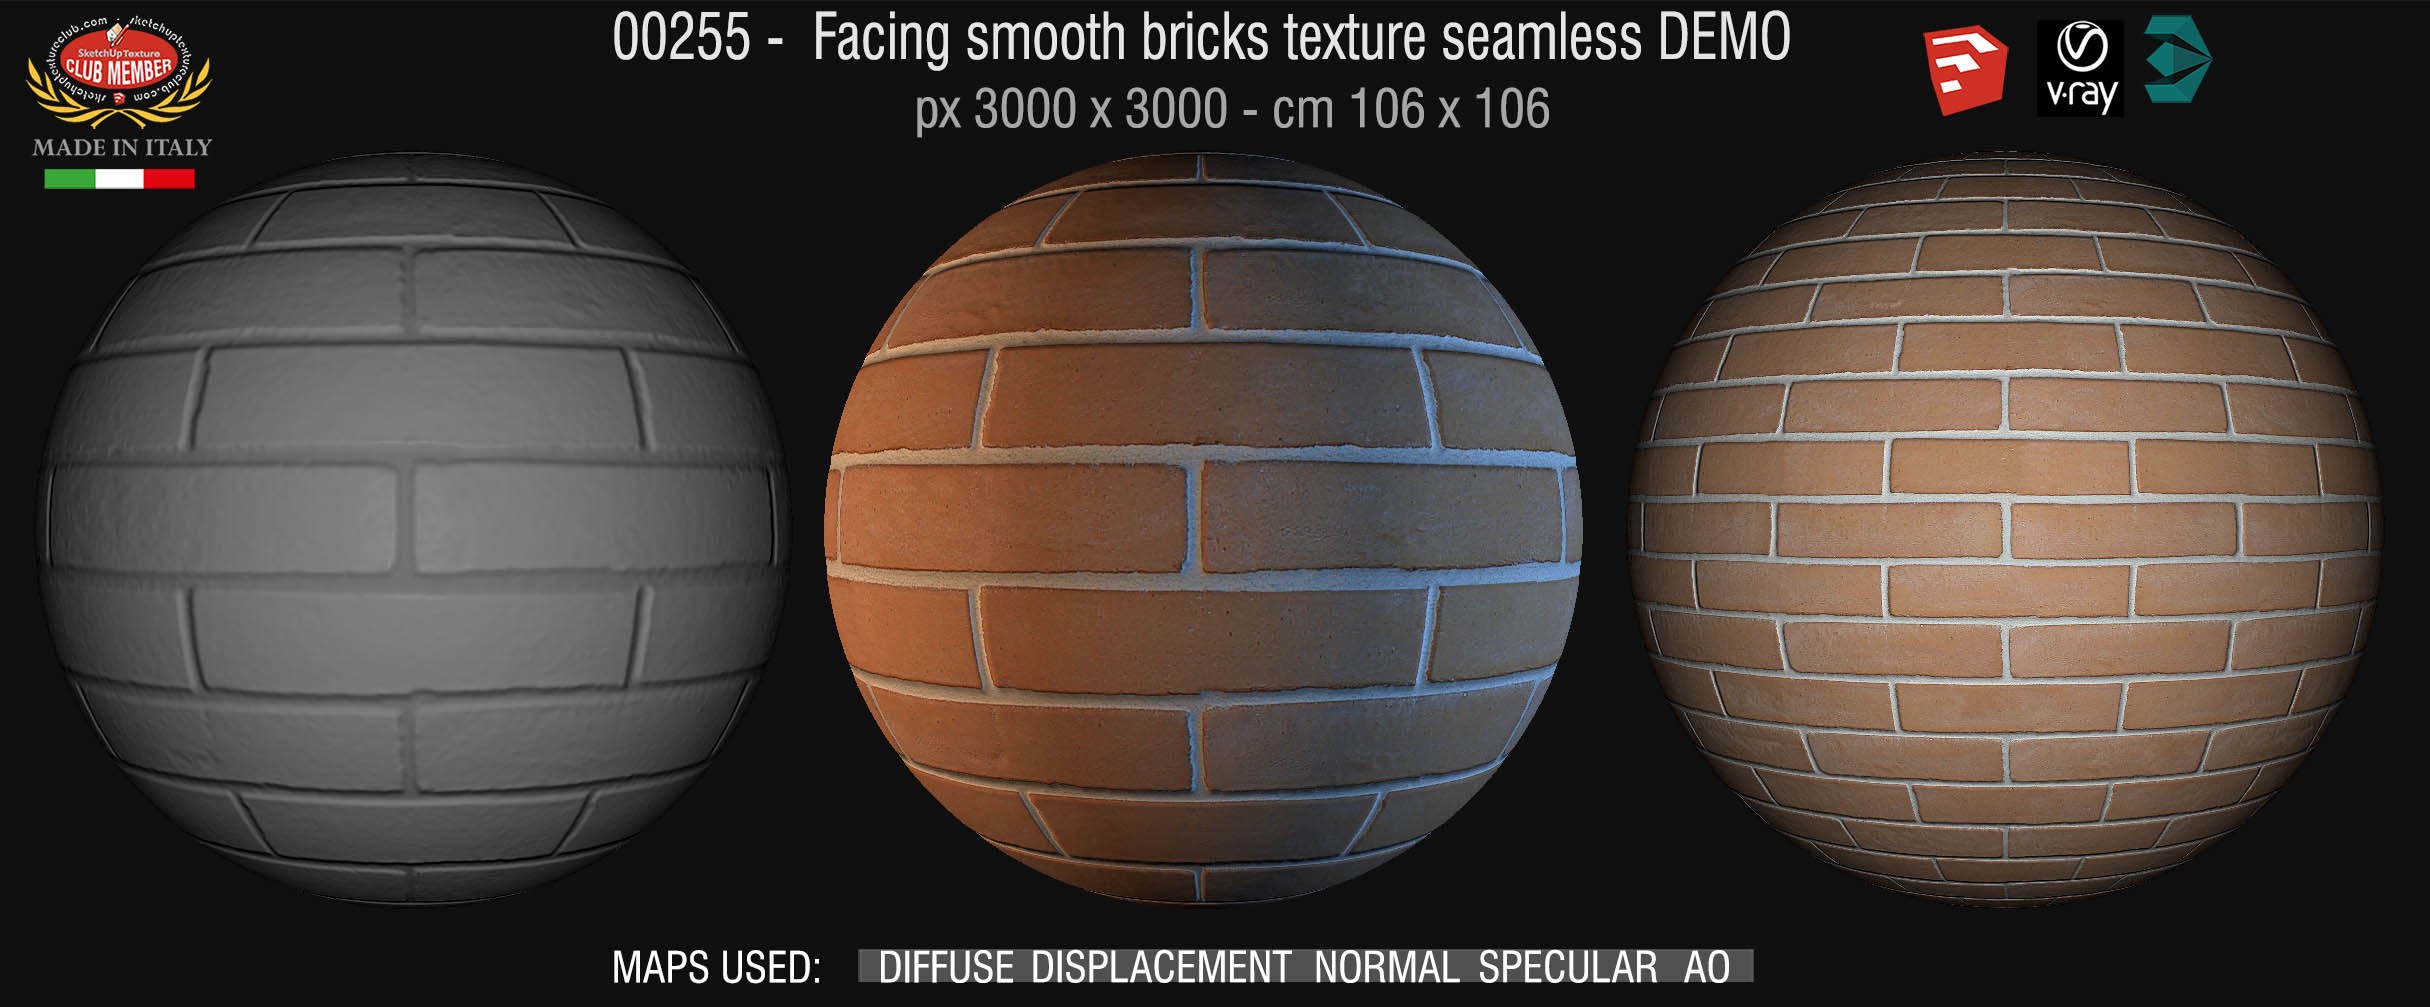 00255 Facing smooth bricks texture seamless + maps DEMO